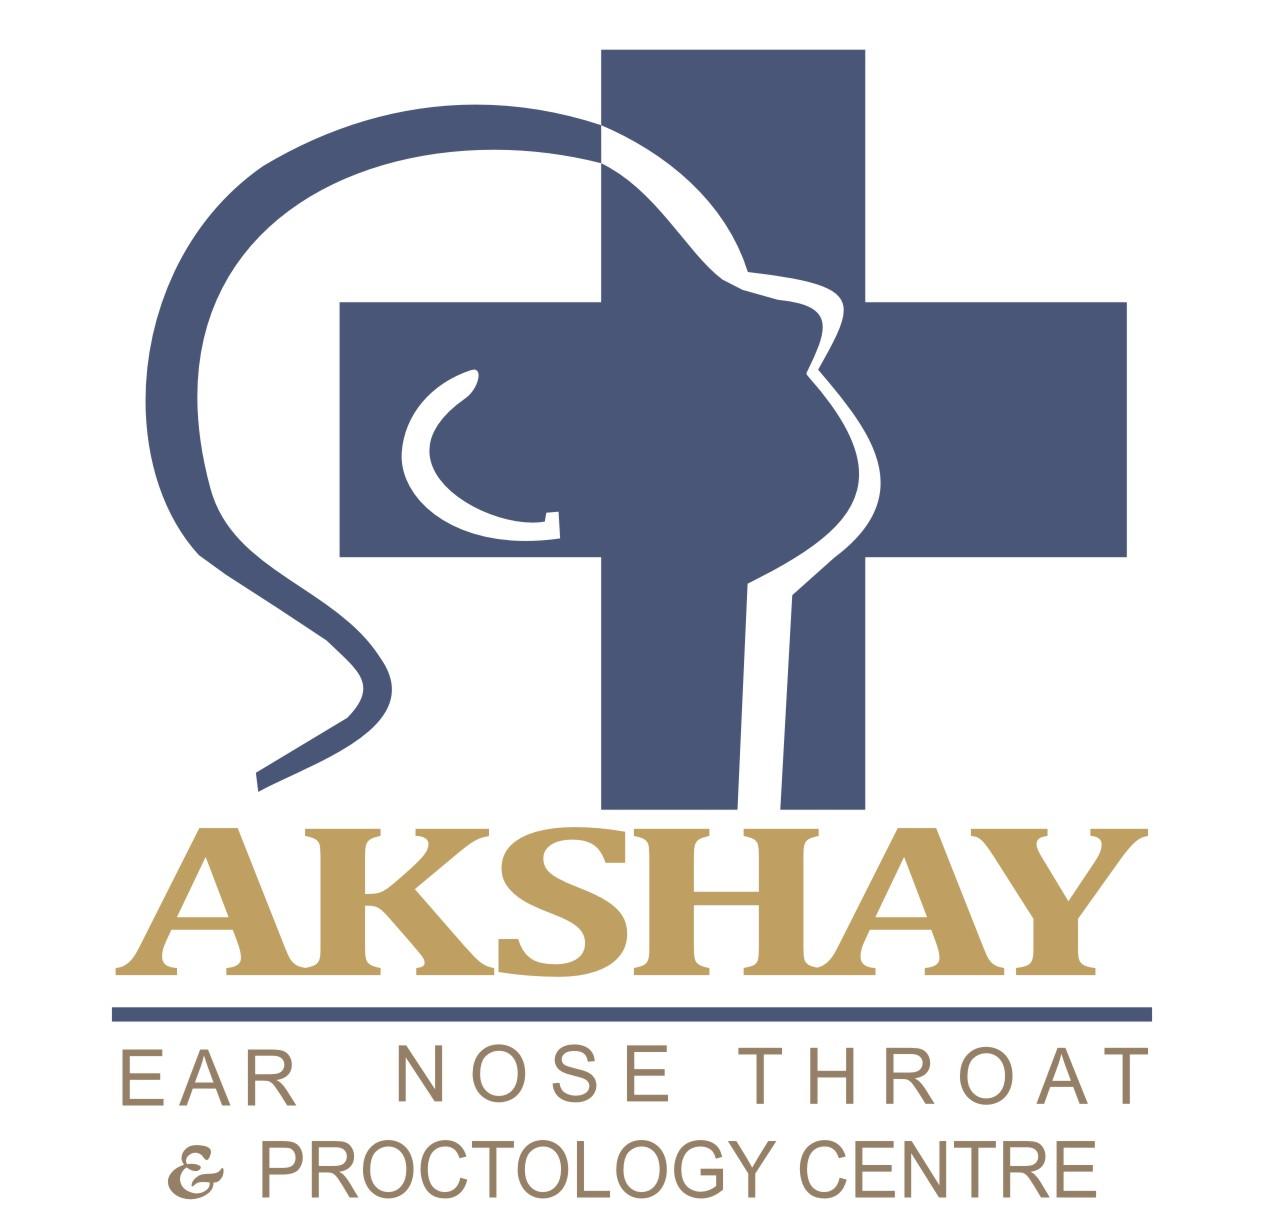 Dr. Akshay Ojha